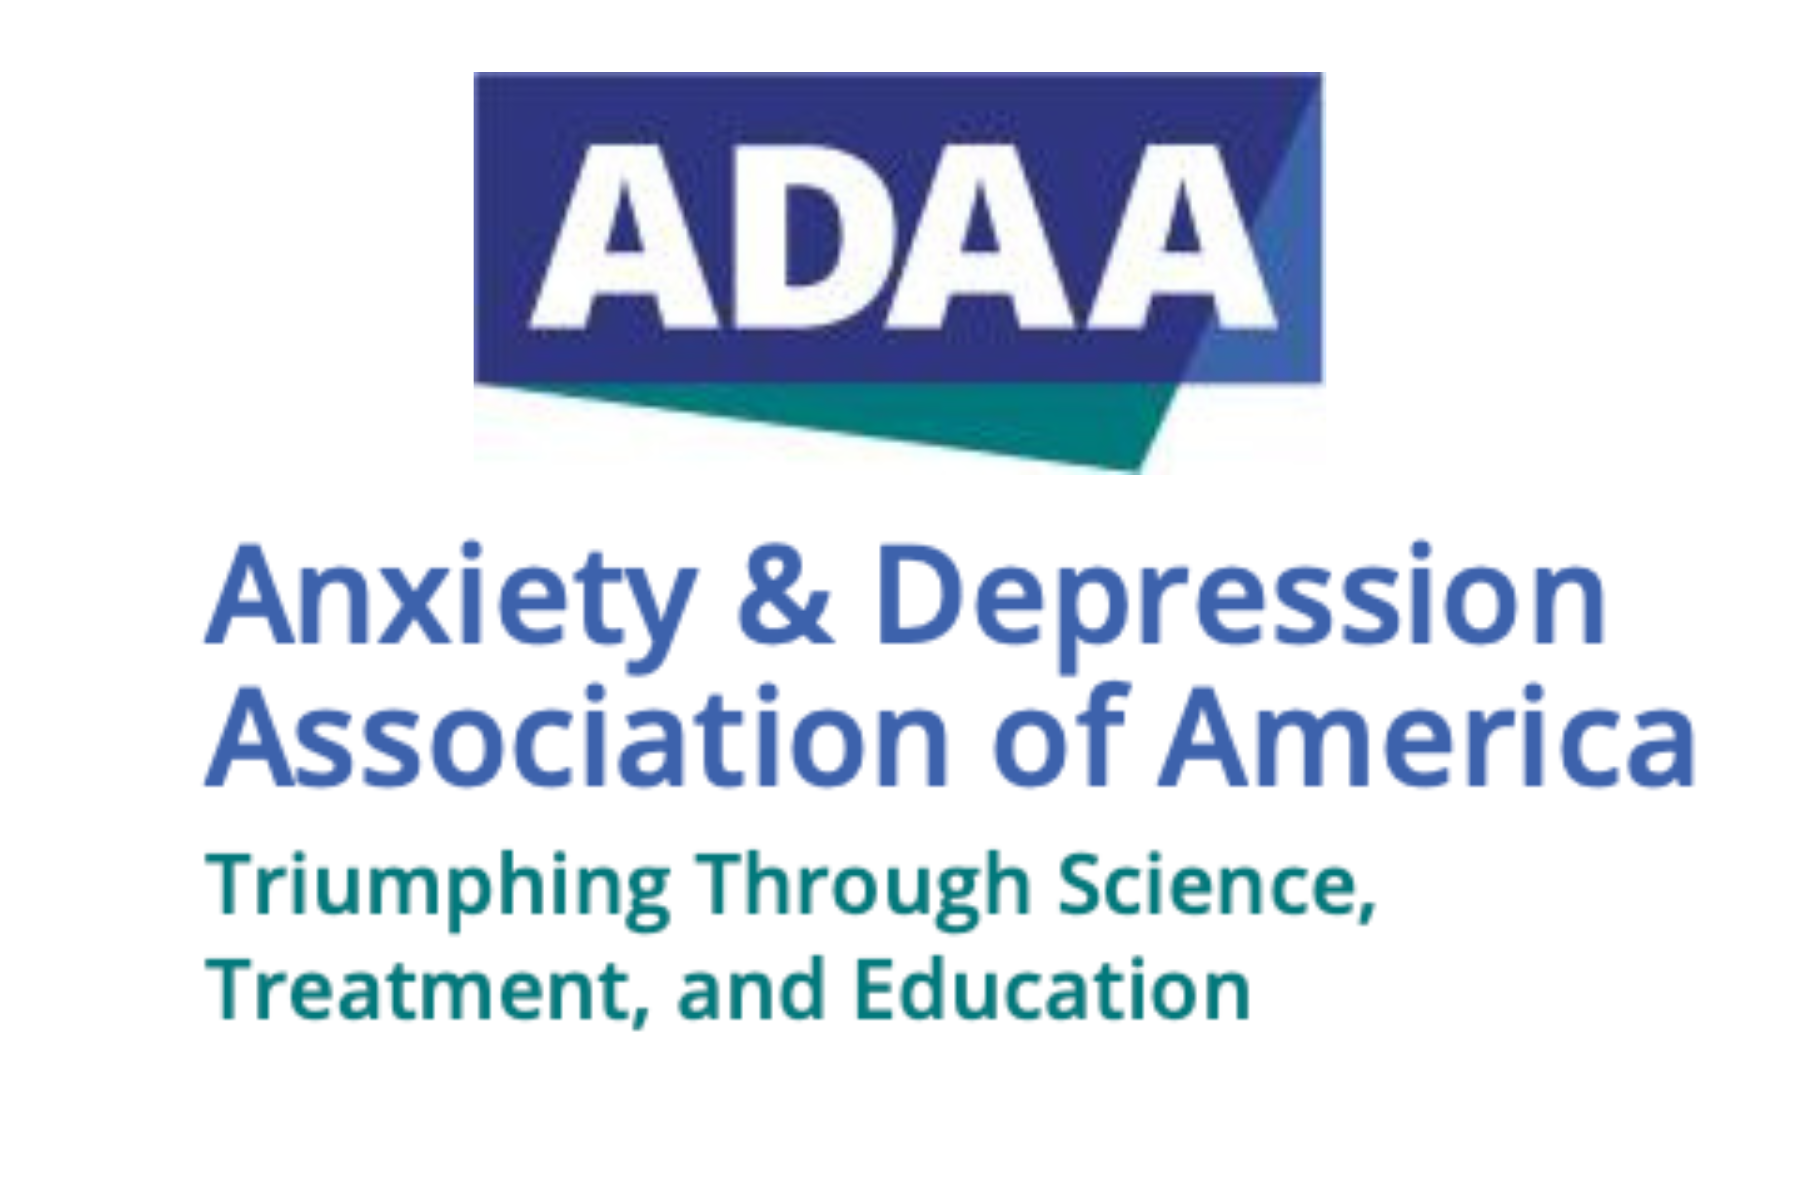 Anxiety  Depression Association of America logo and tagline